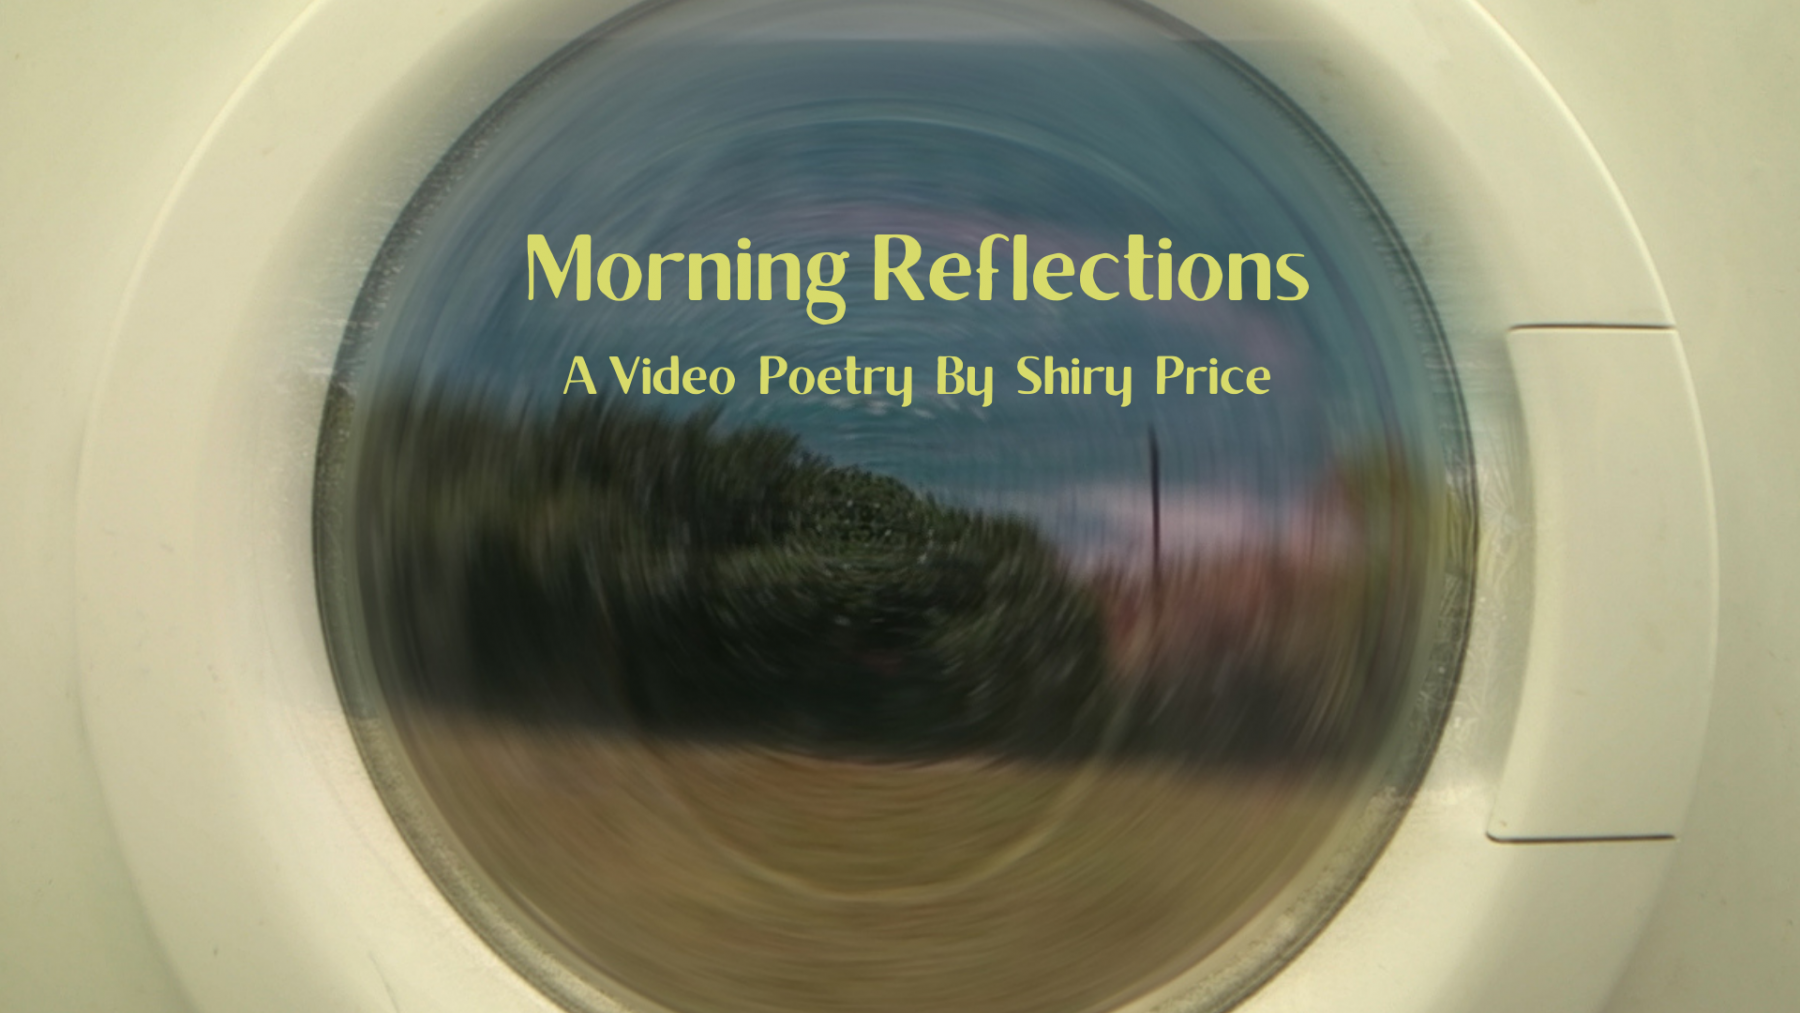 Morning reflections